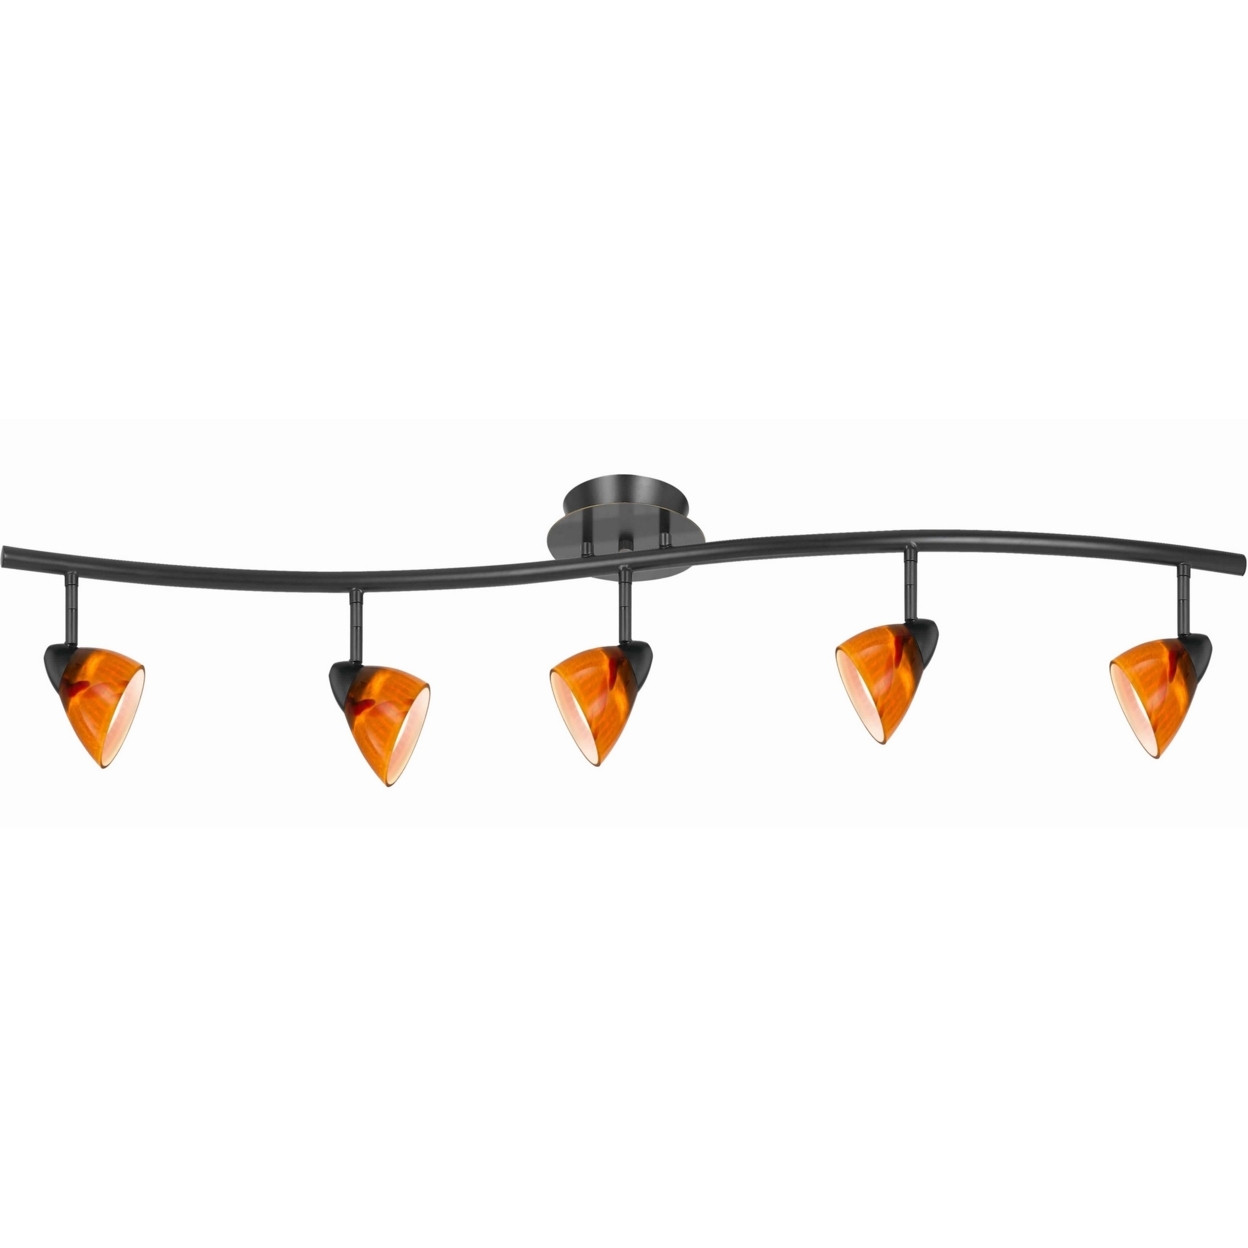 5 Light 120V Metal Track Light Fixture With Glass Shade, Black And Orange- Saltoro Sherpi